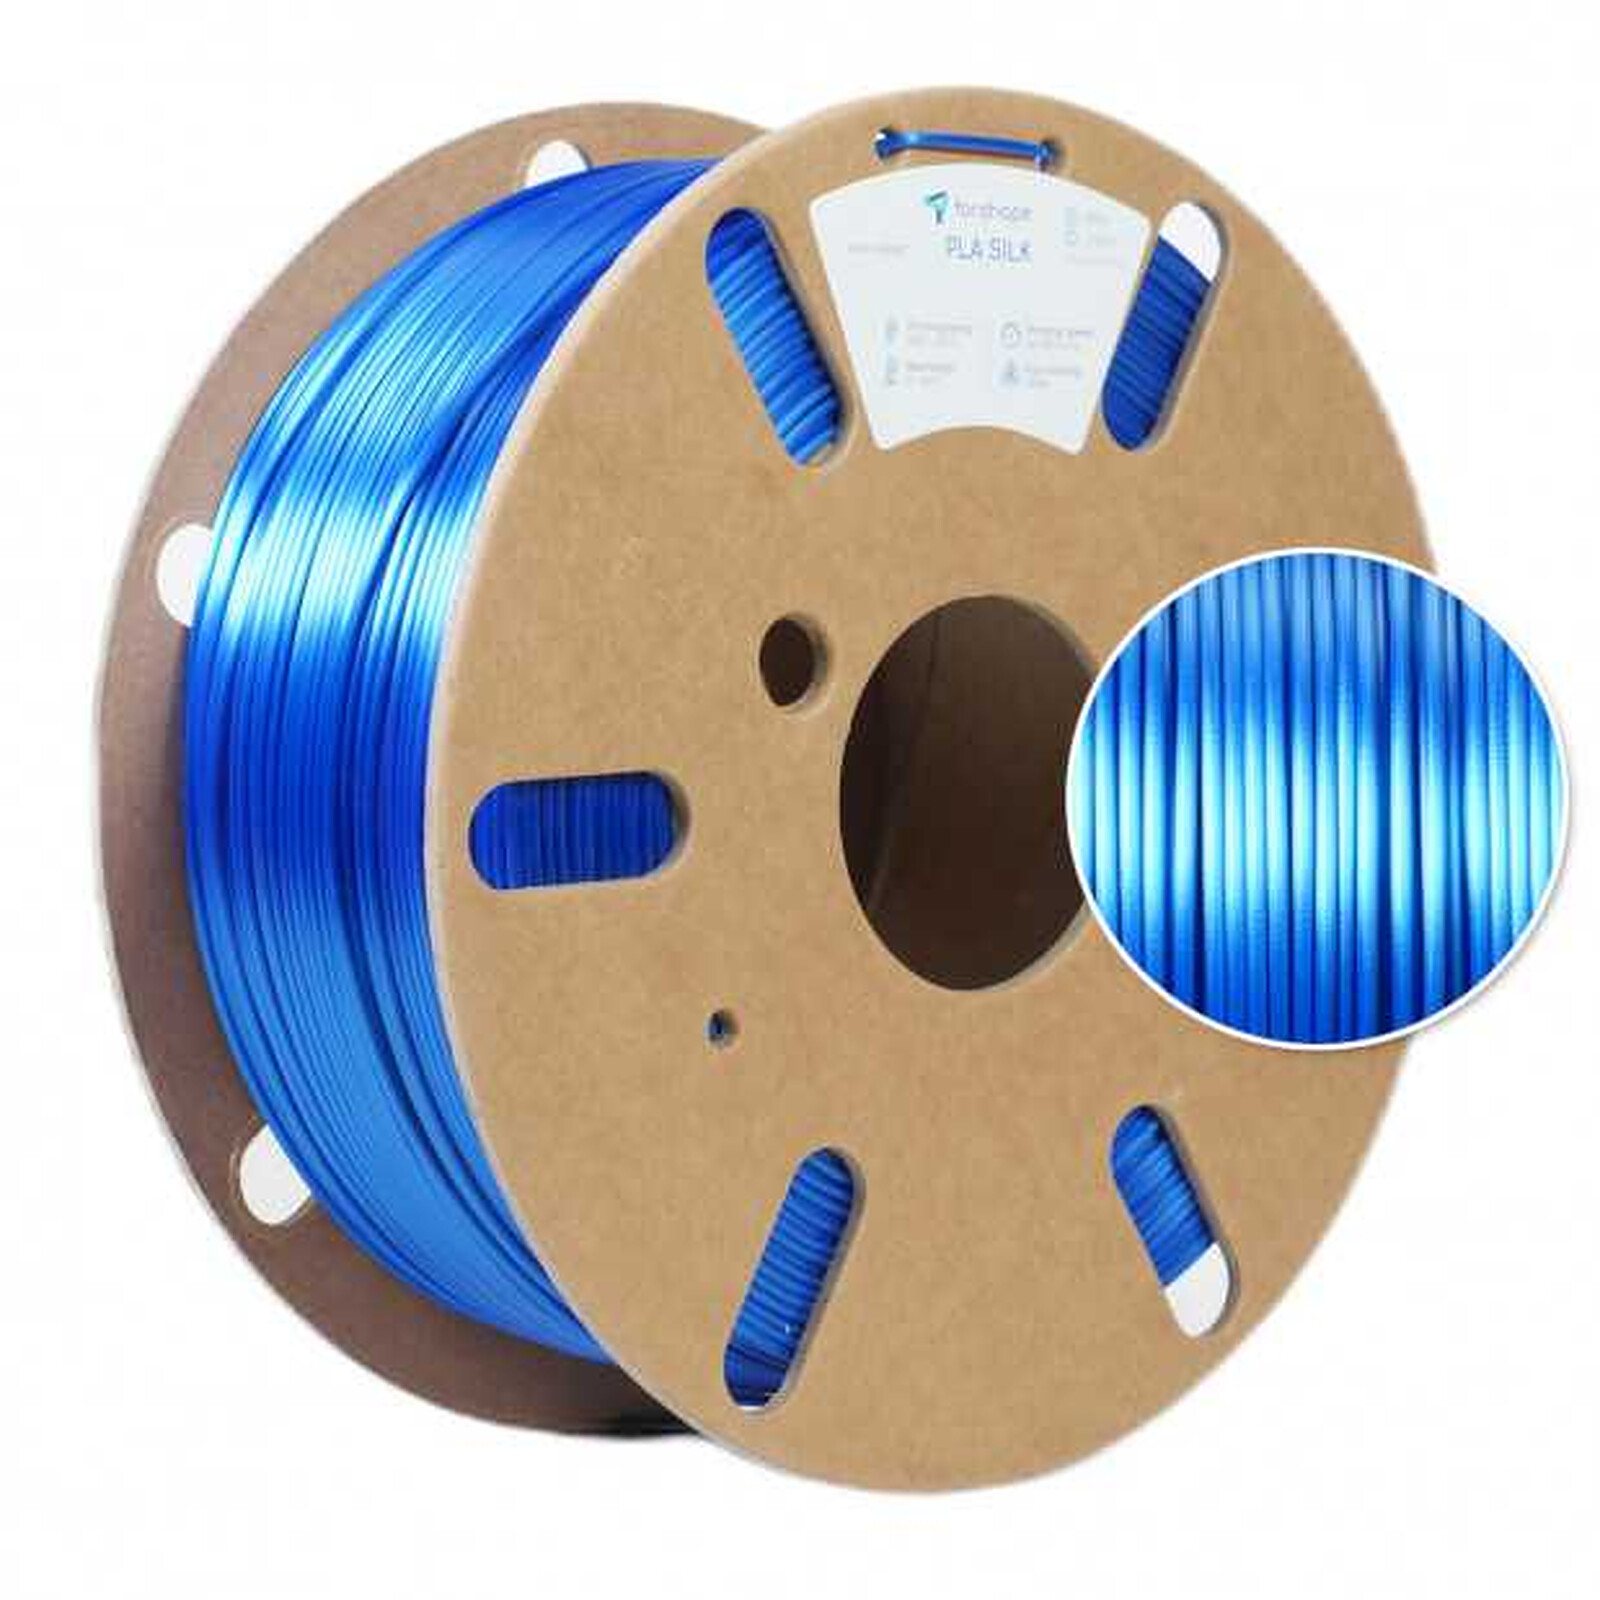 Forshape PLA Silk - 1.75 mm 1 Kg - Bleu - Filament 3D - LDLC